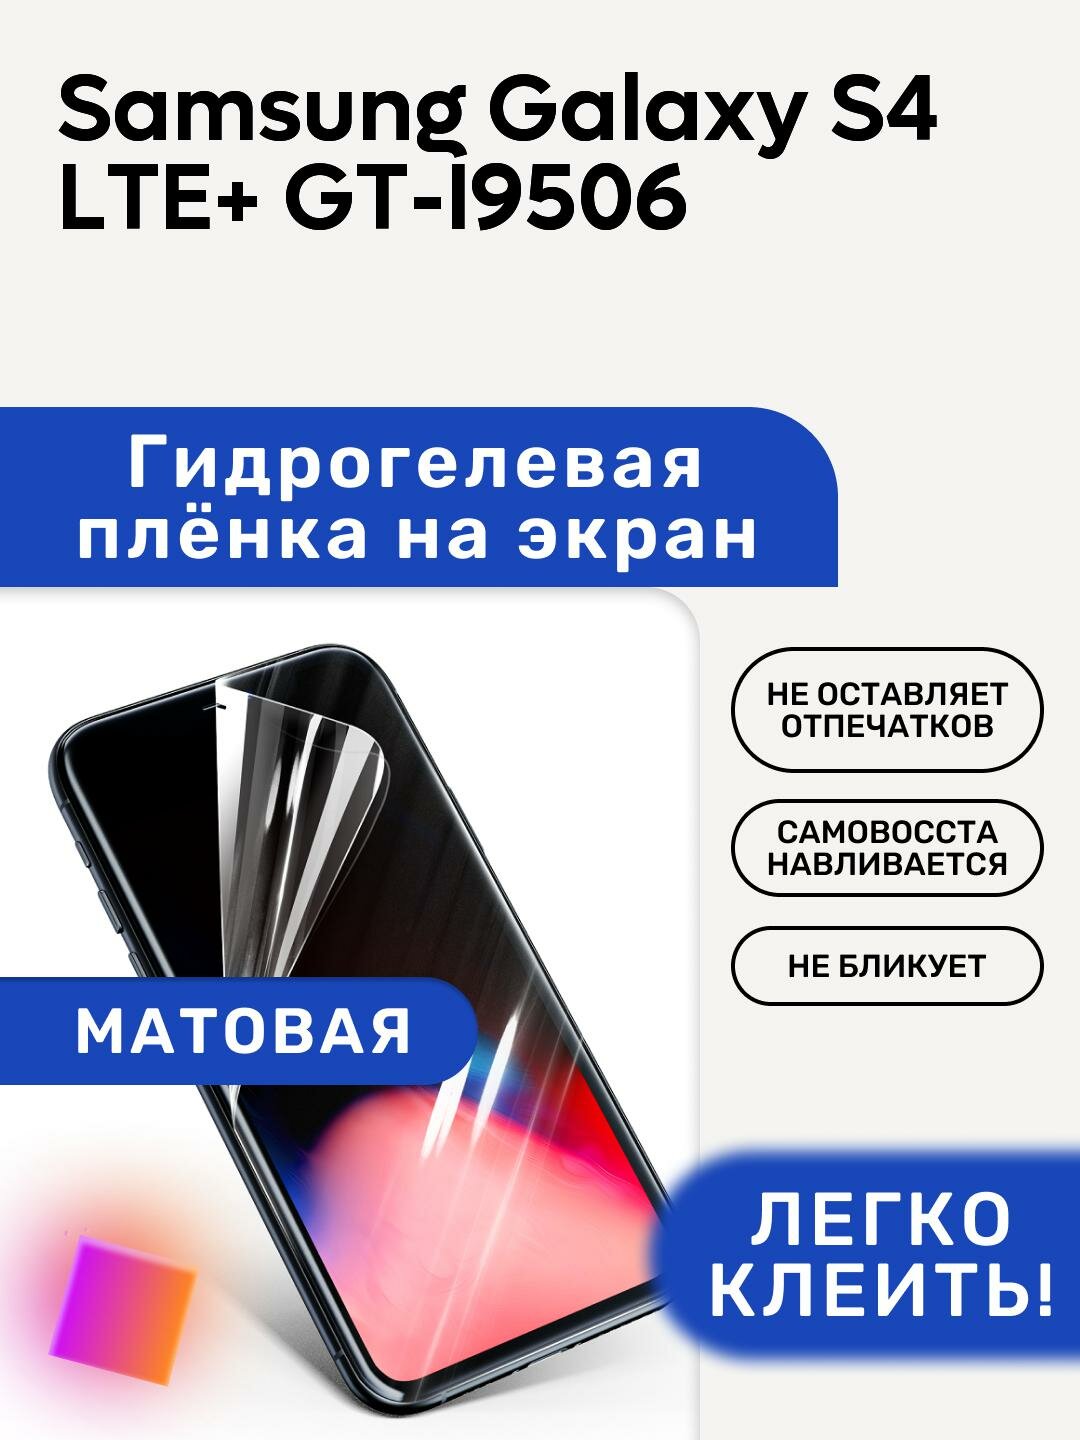 Матовая Гидрогелевая плёнка, полиуретановая, защита экрана Samsung Galaxy S4 LTE+ GT-I9506